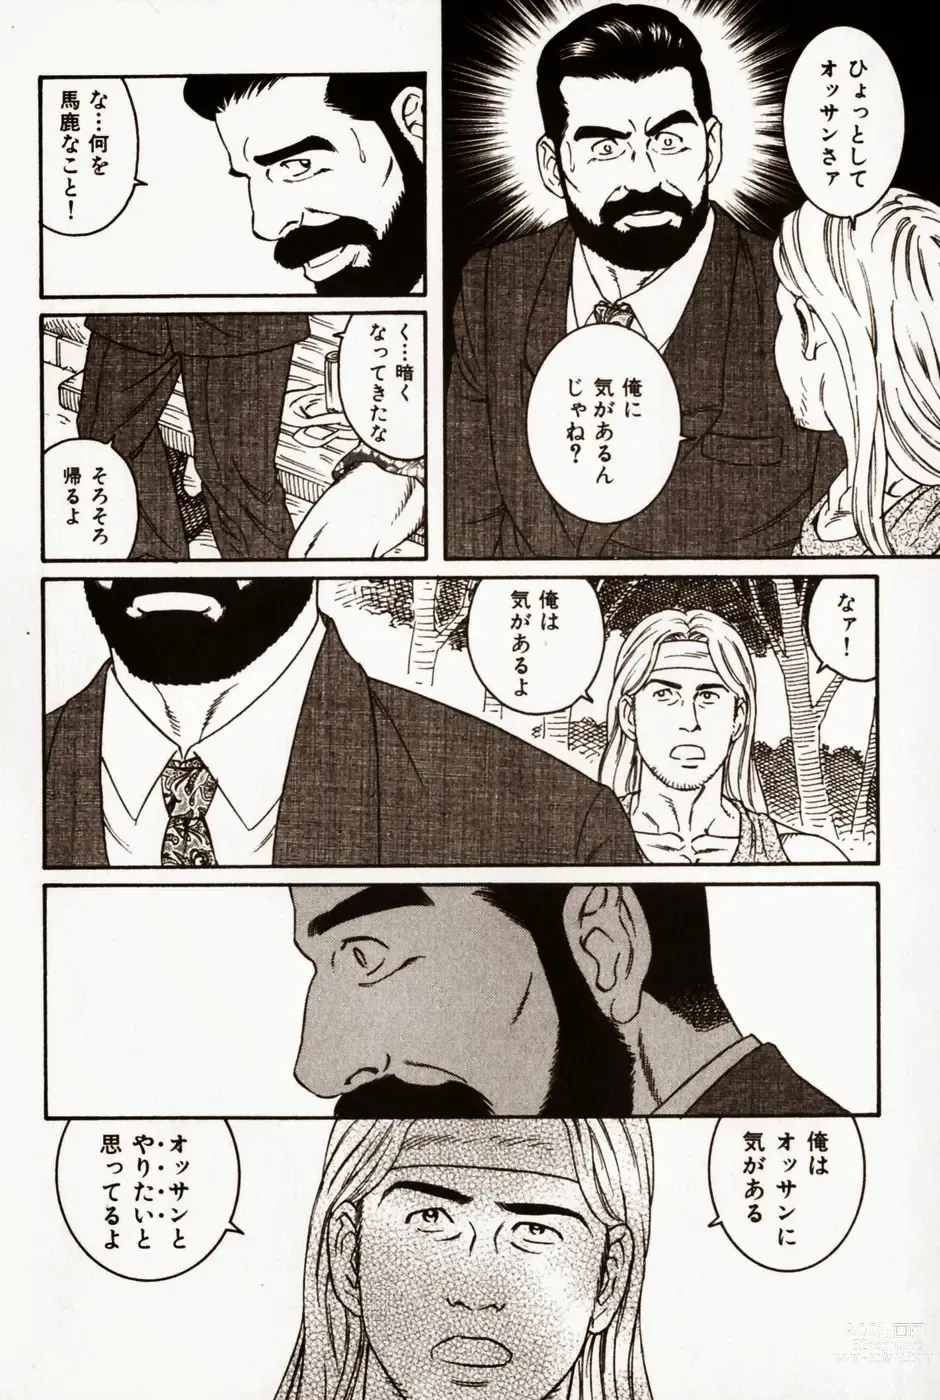 Page 6 of manga Shinkei-sei Ien